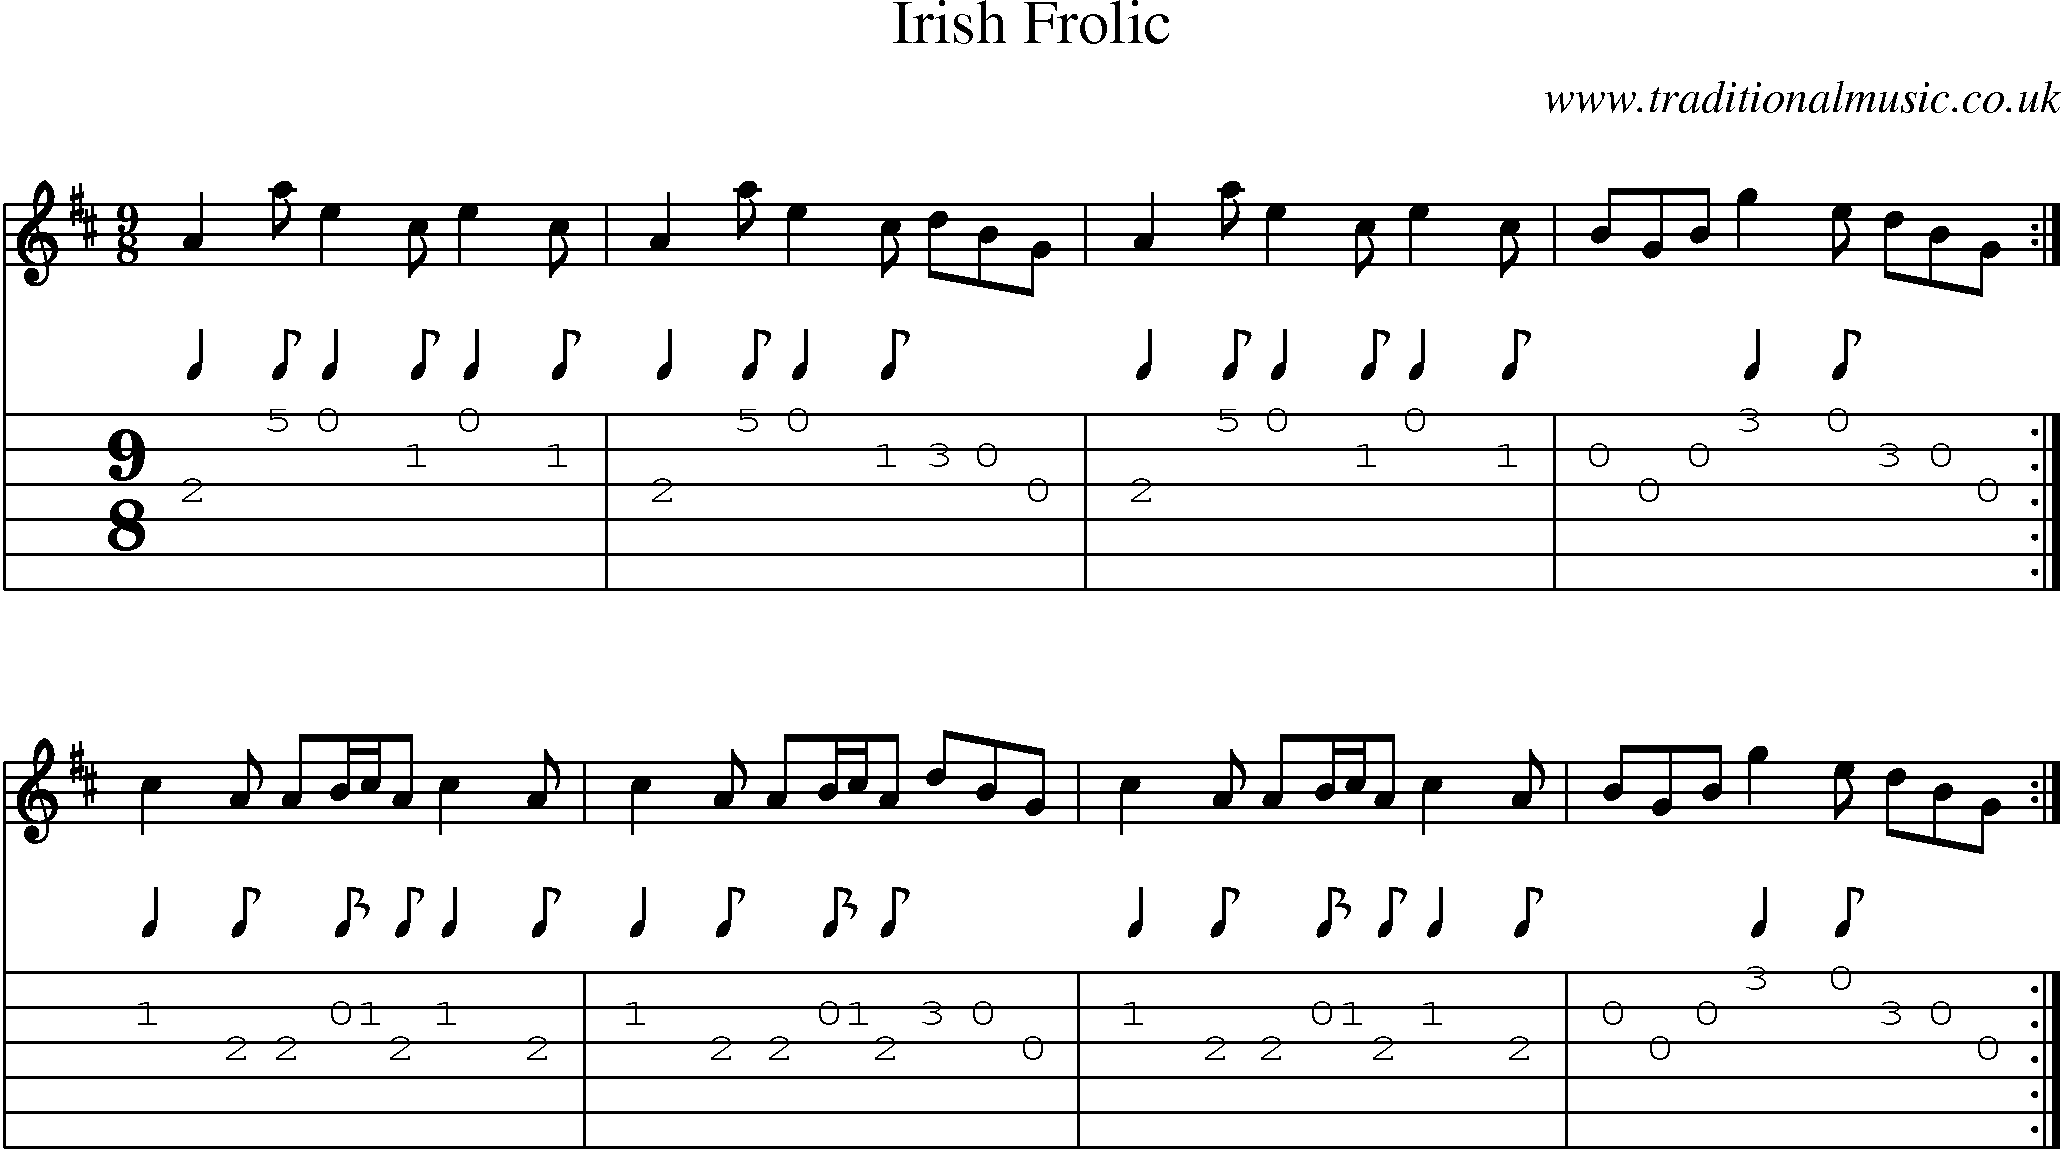 Music Score and Guitar Tabs for Irish Frolic